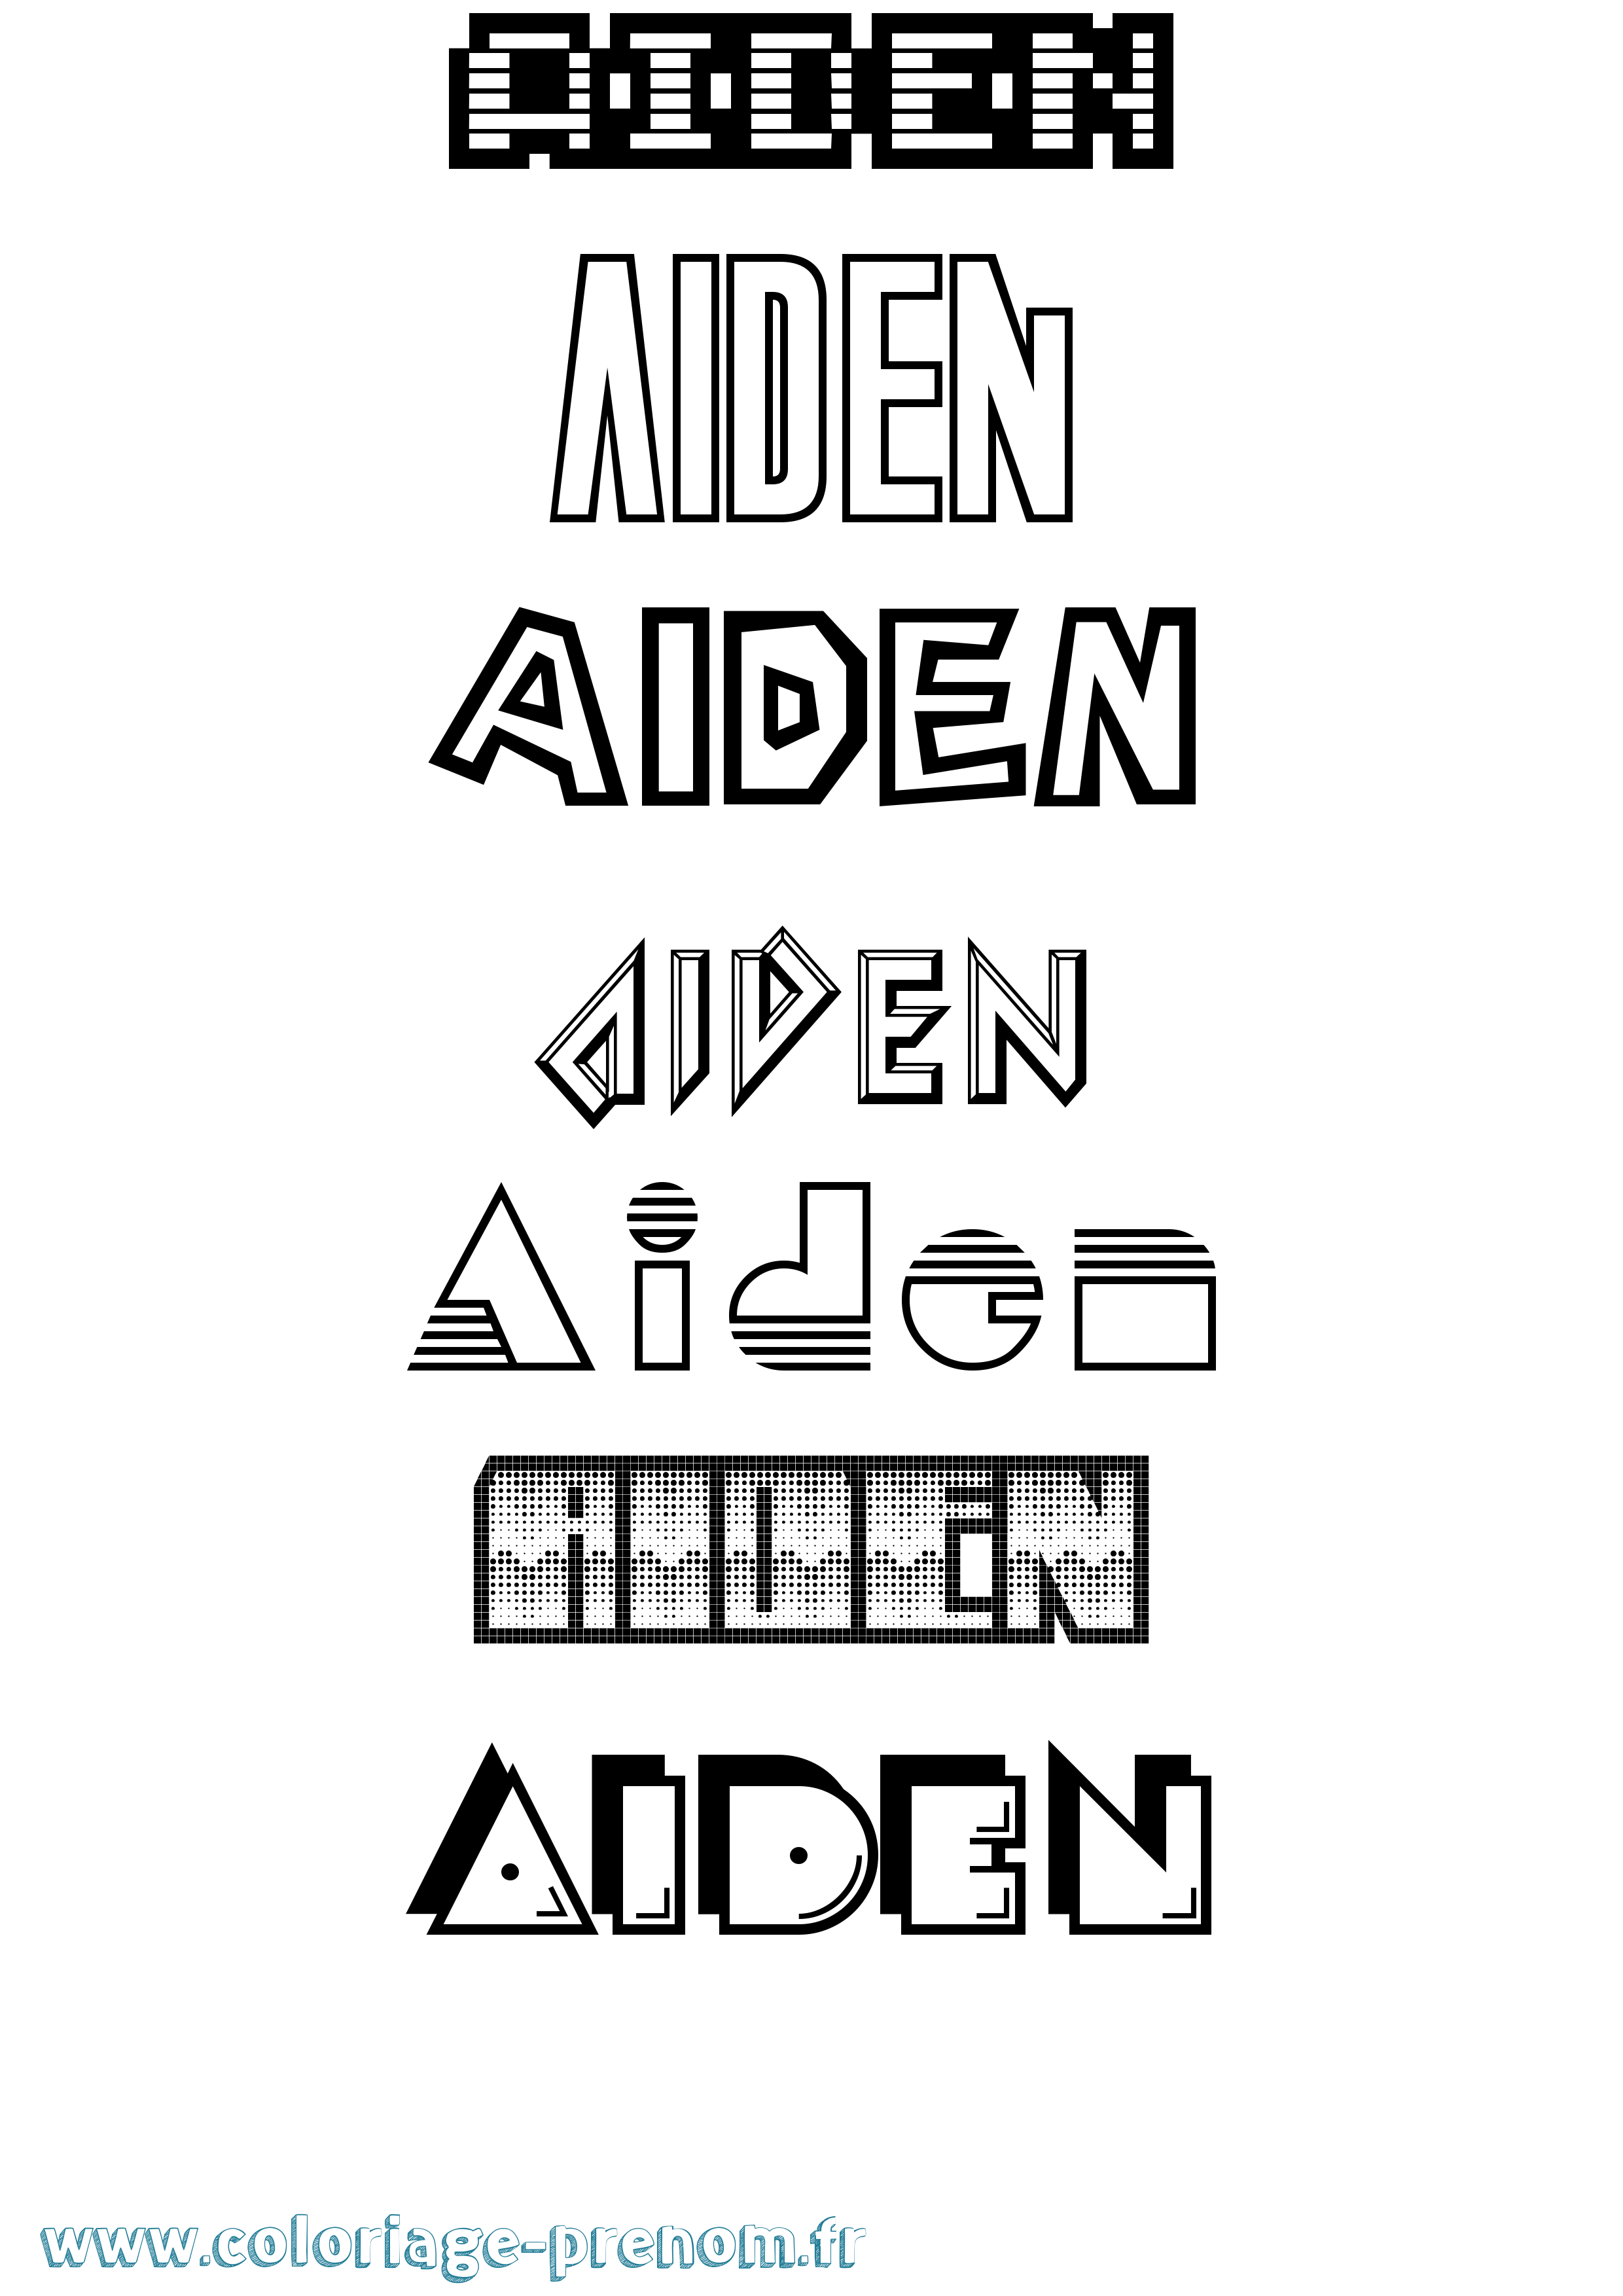 Coloriage prénom Aiden